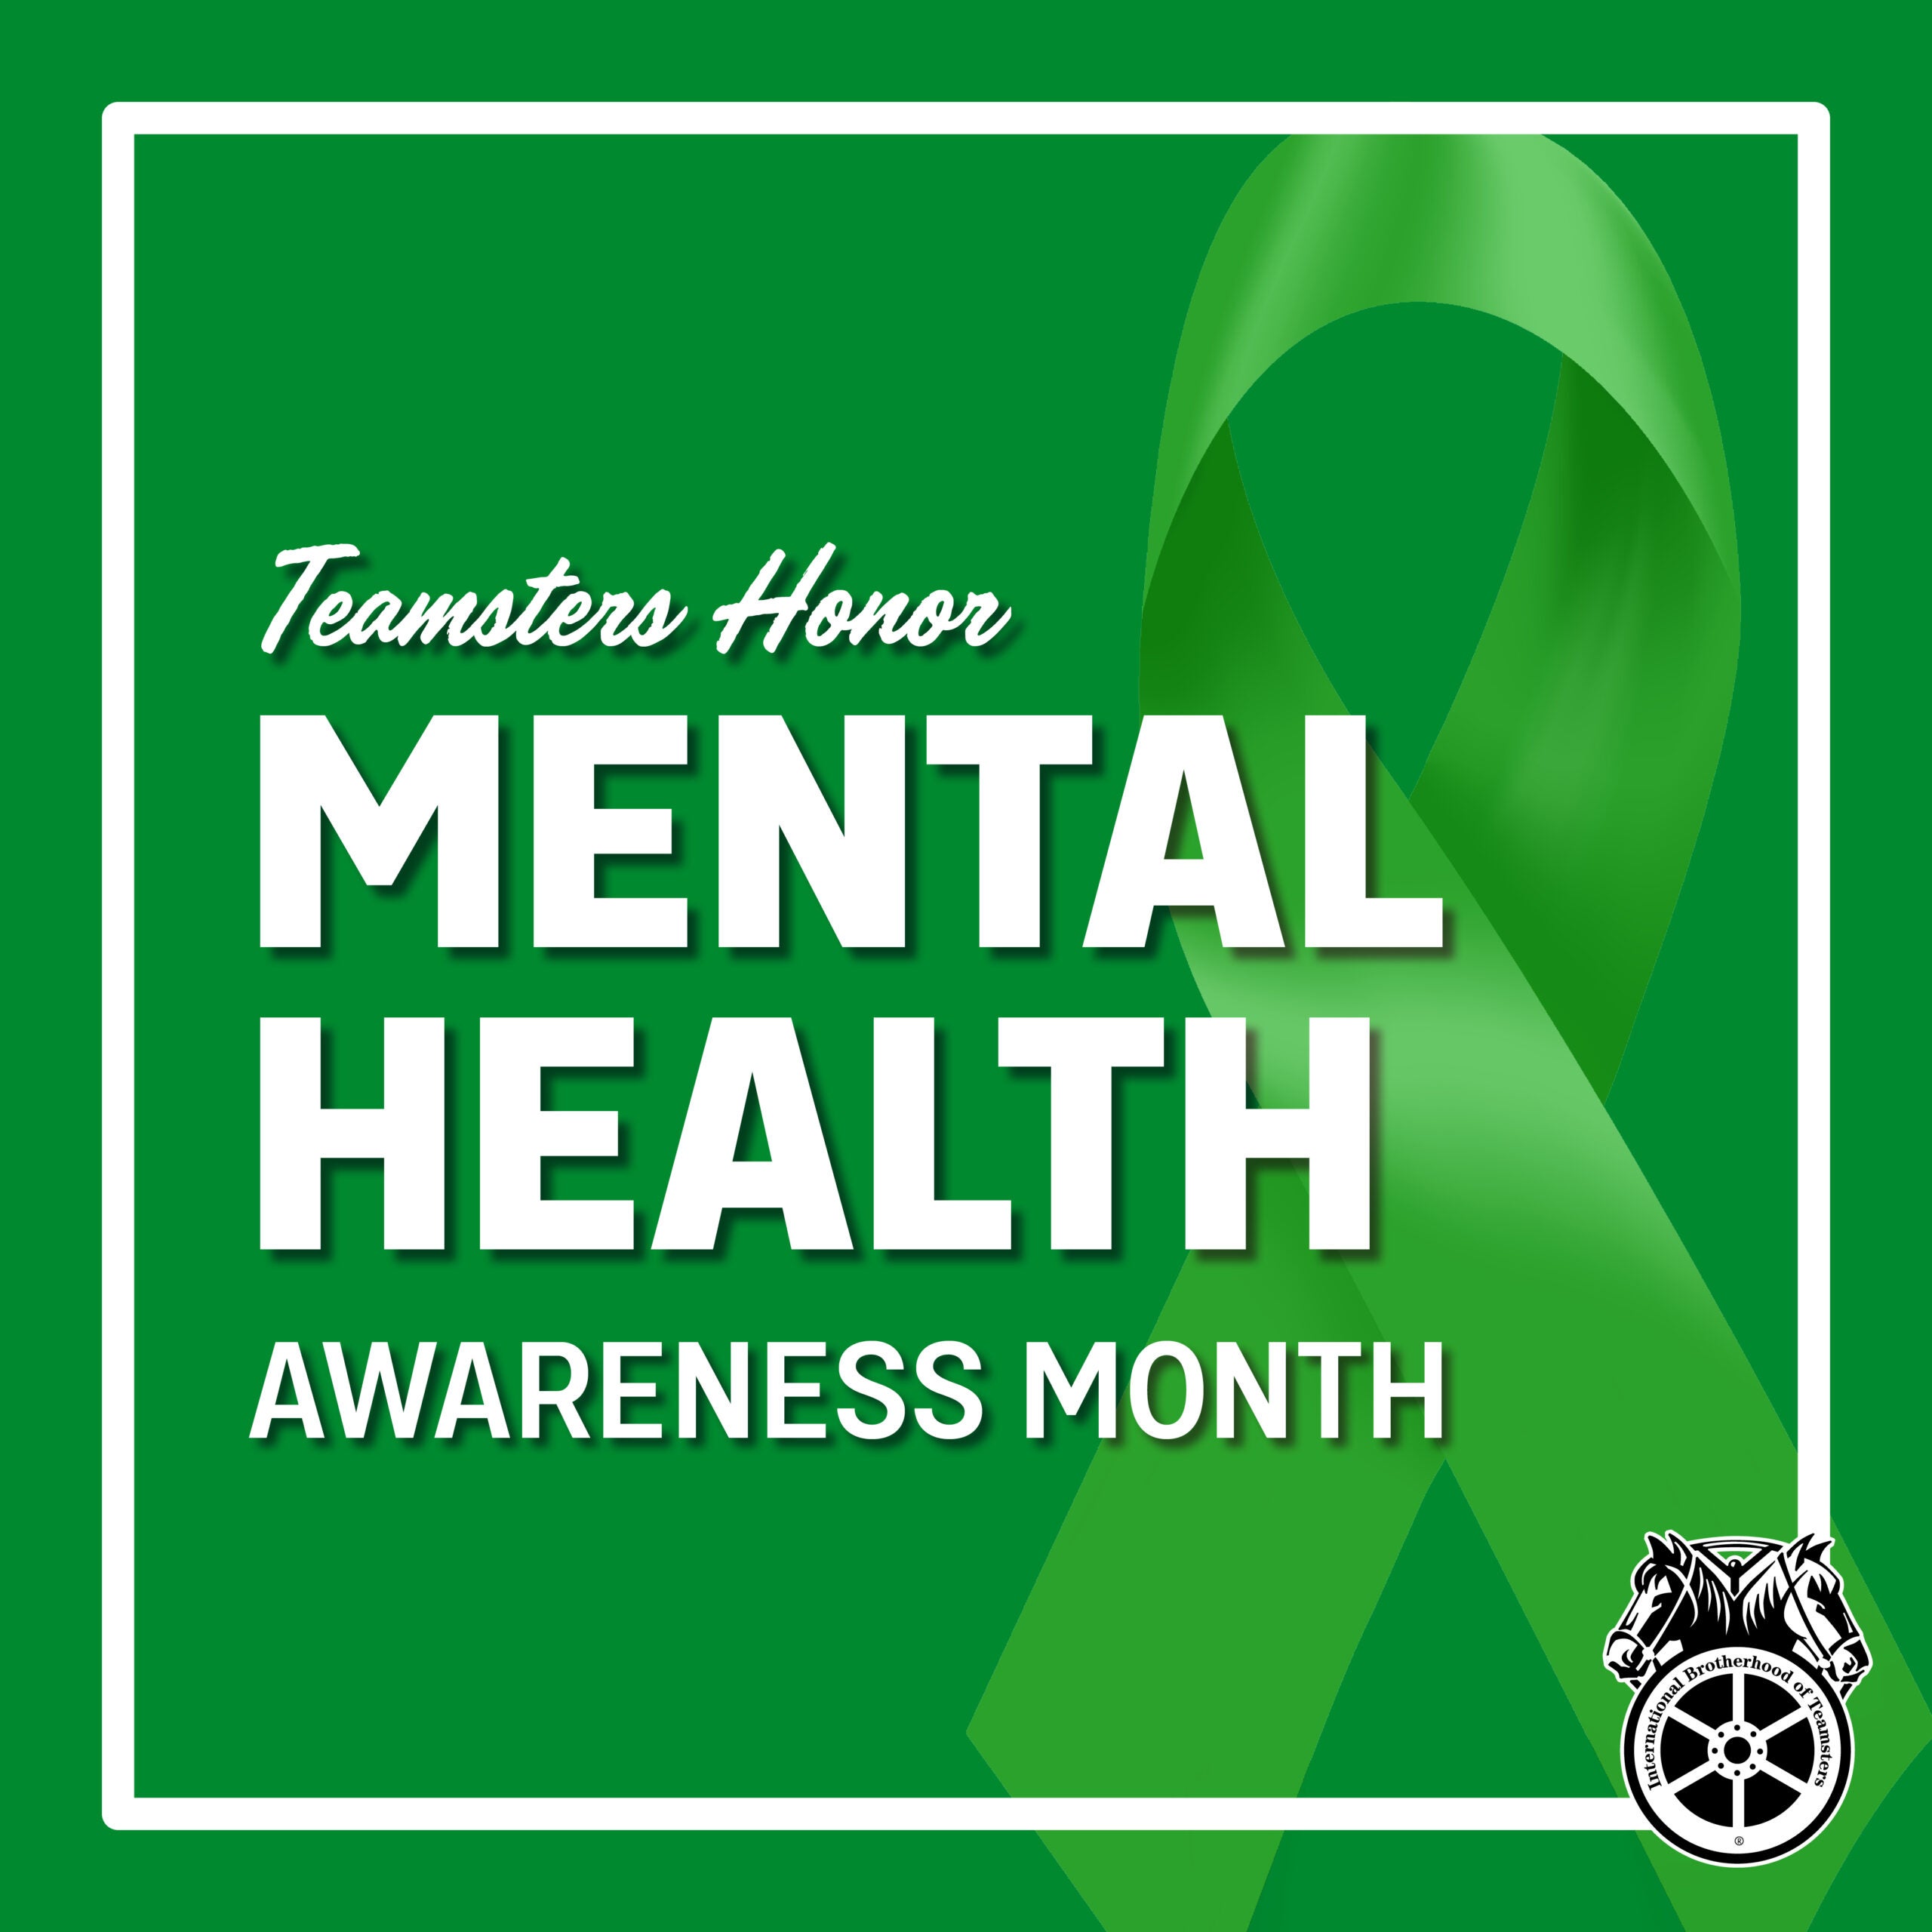 Teamsters observe Mental Health Awareness Month